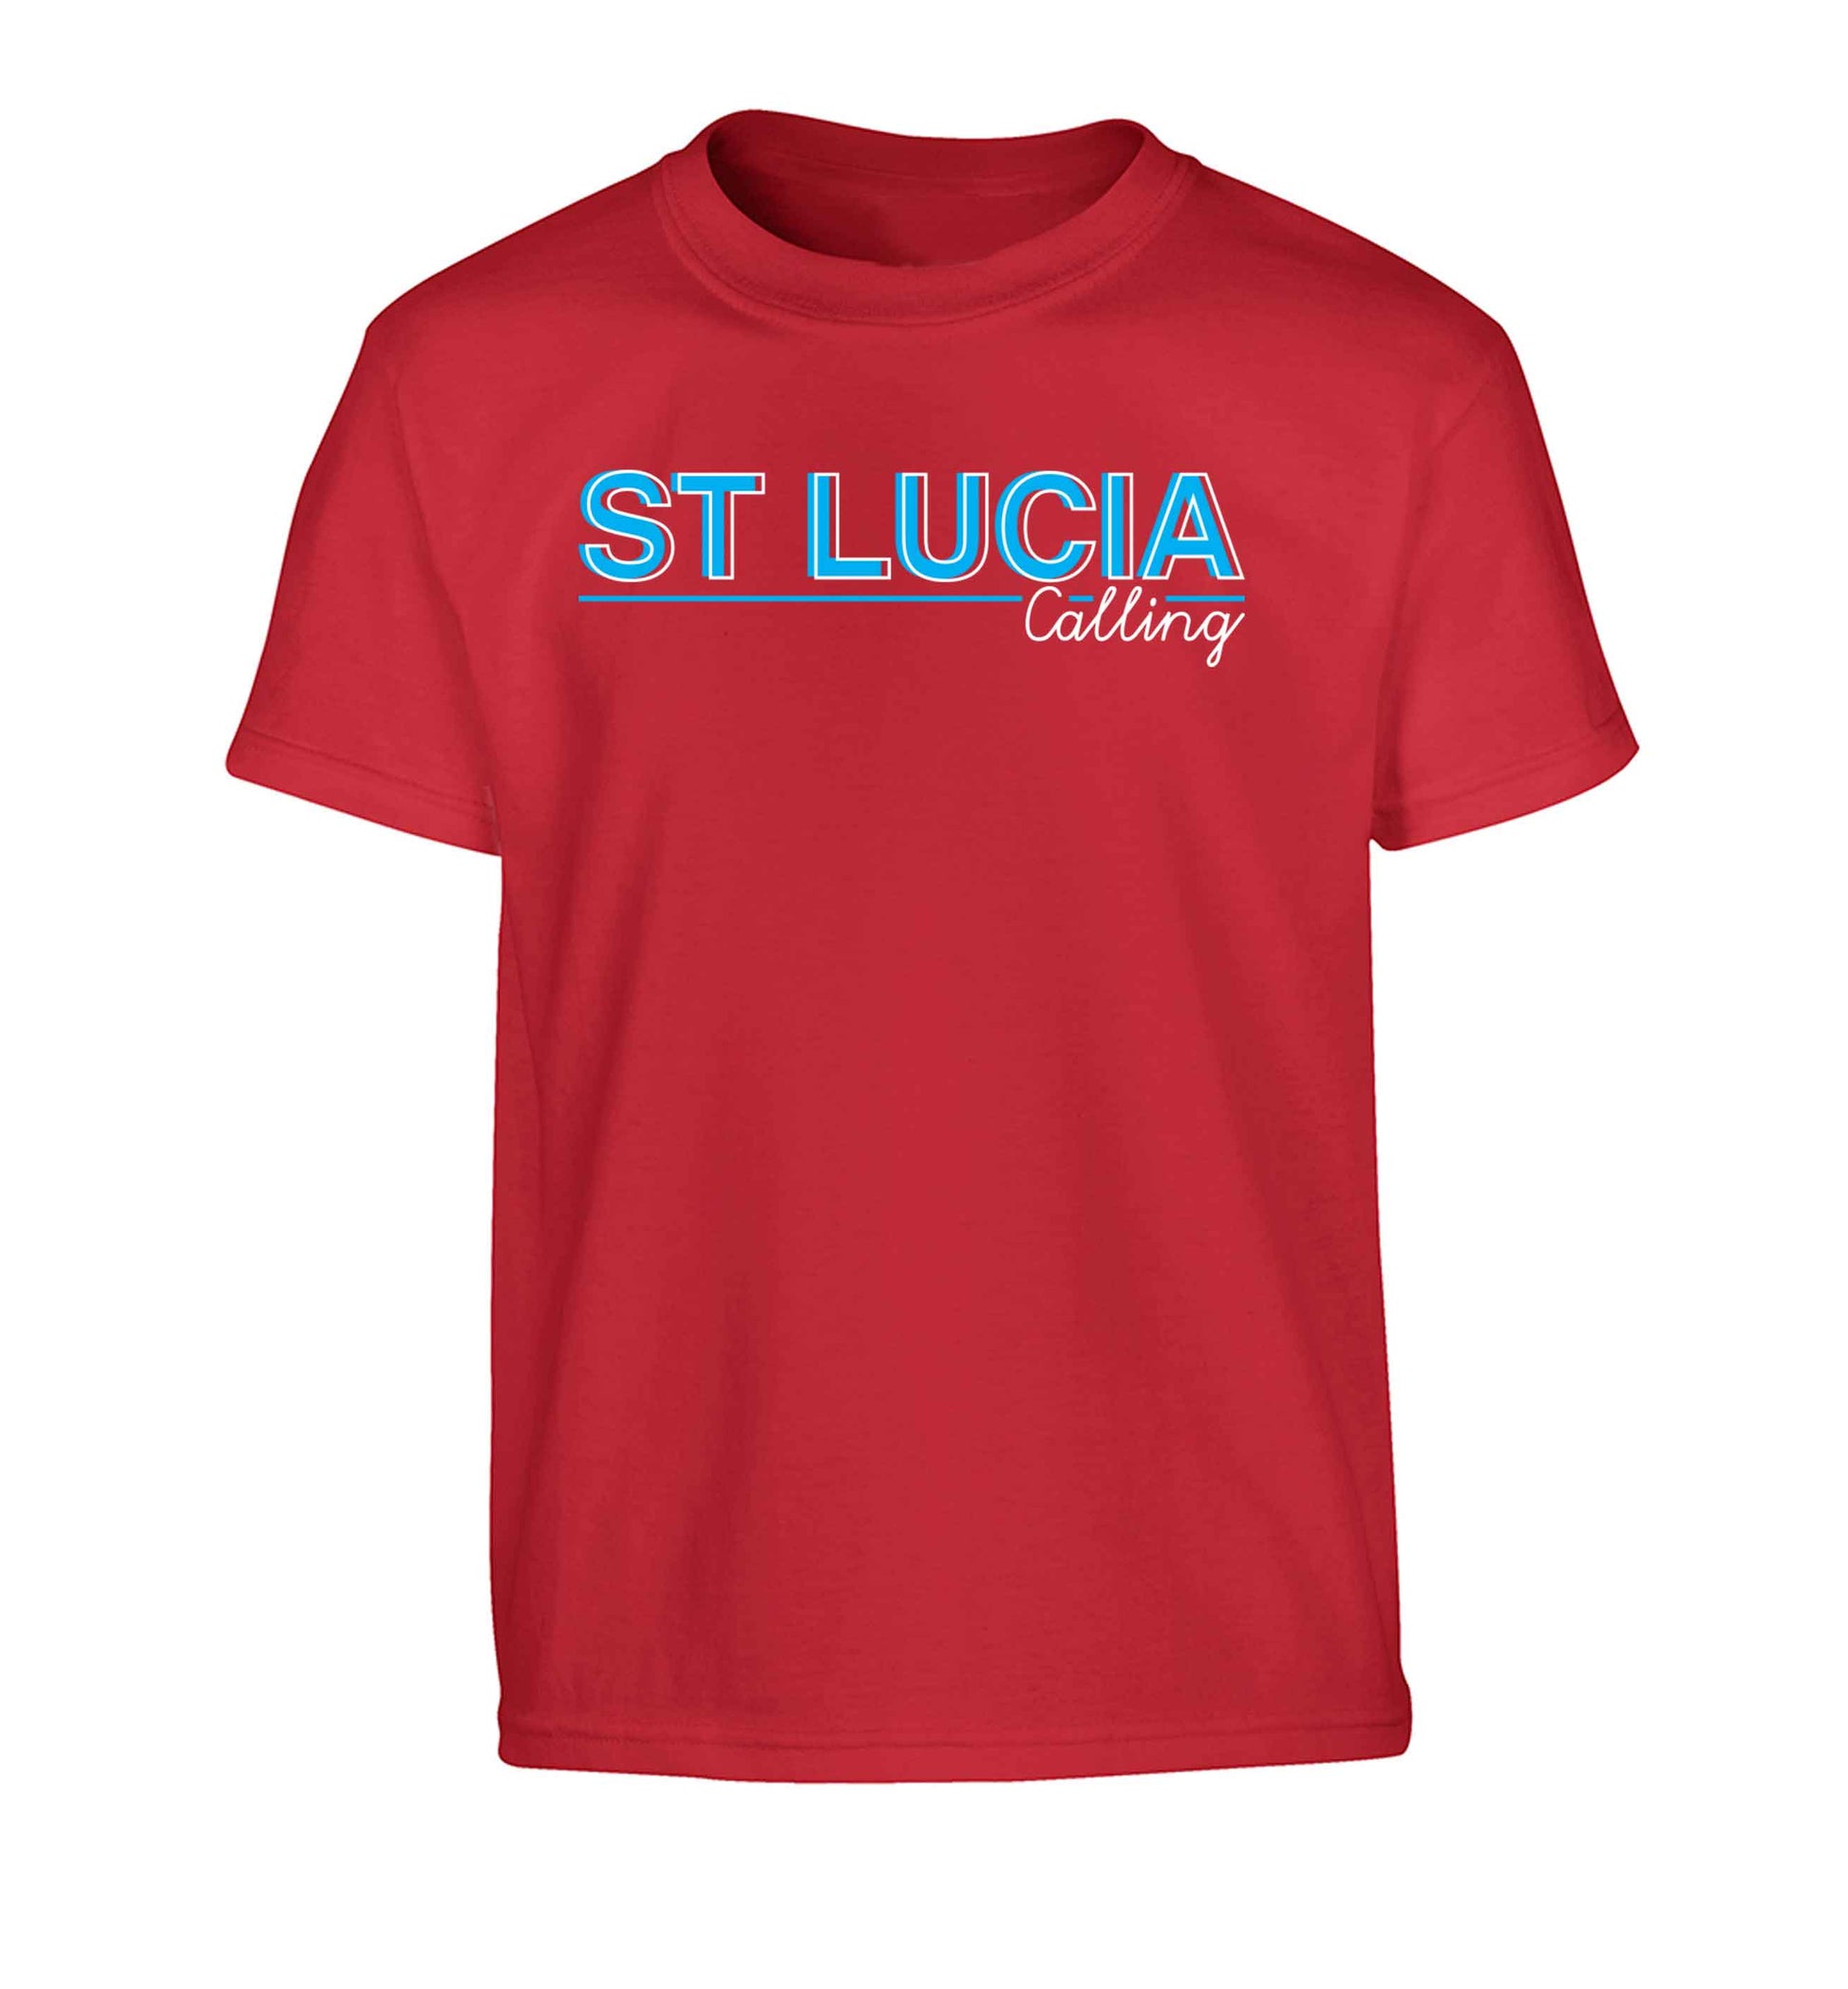 St Lucia calling Children's red Tshirt 12-13 Years